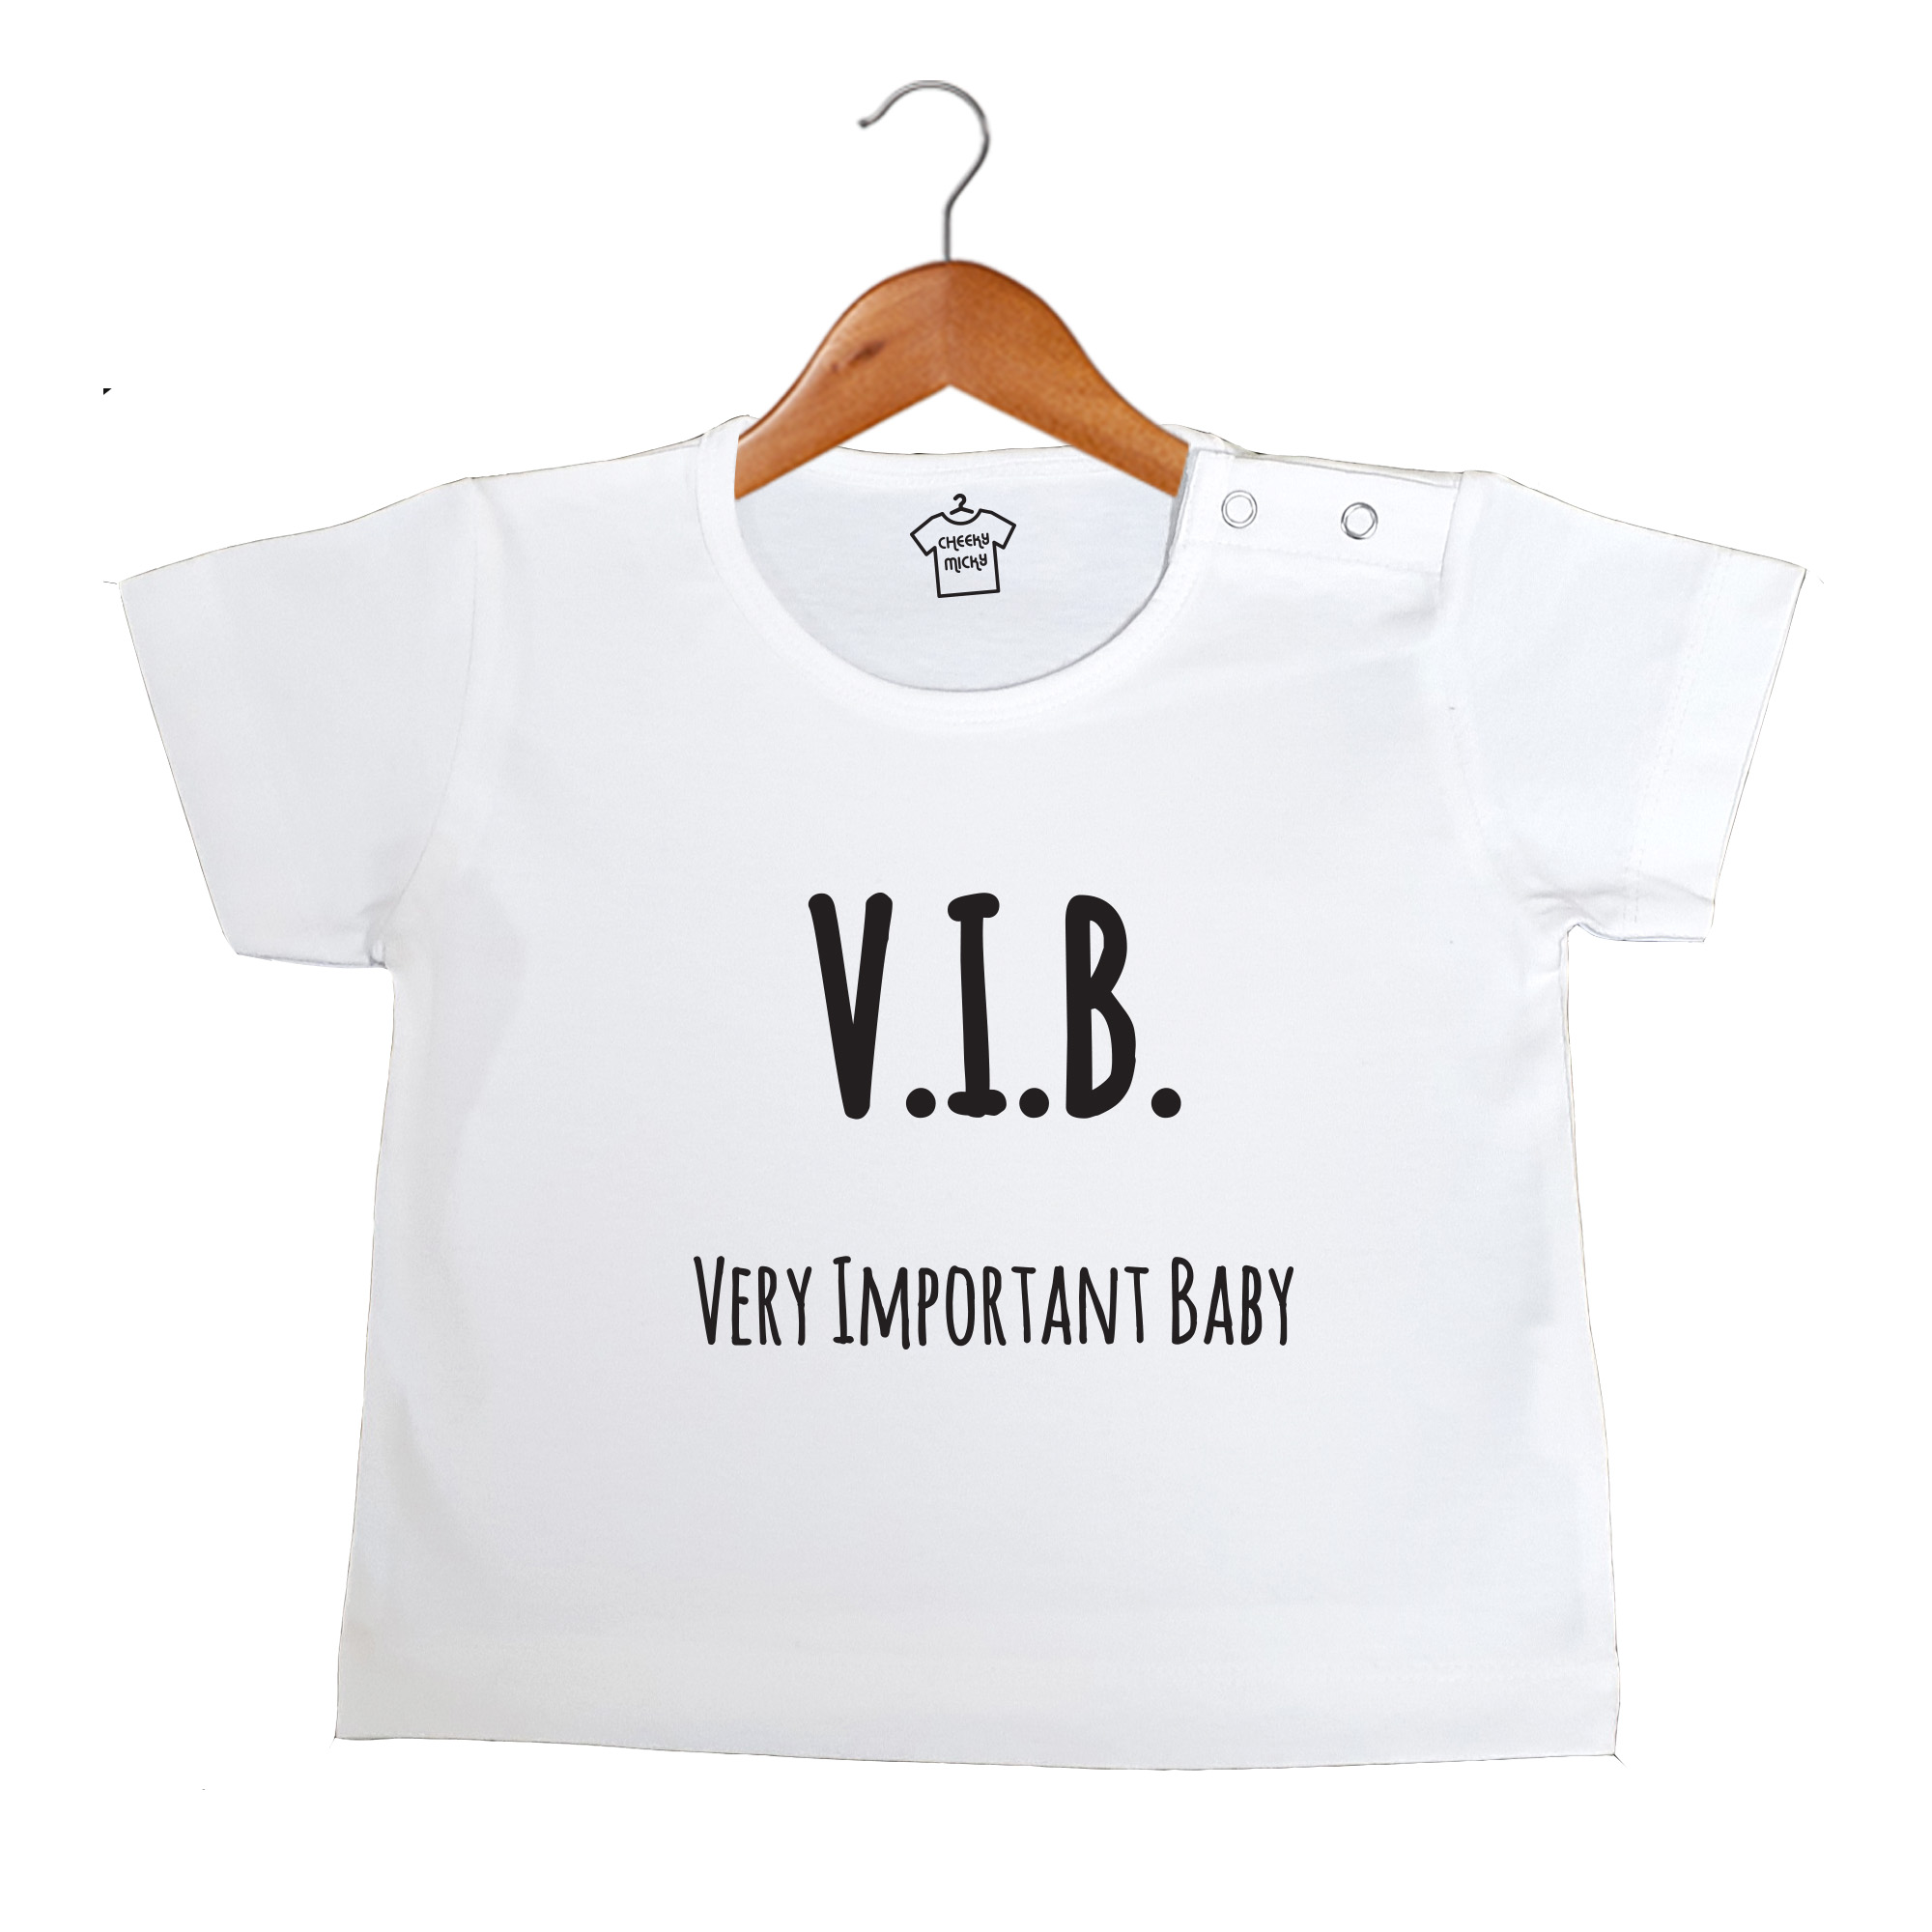 White T-shirt, 100% cotton, machine washable. Age 6-12 months. Print: V.I.B. Very Important Baby.